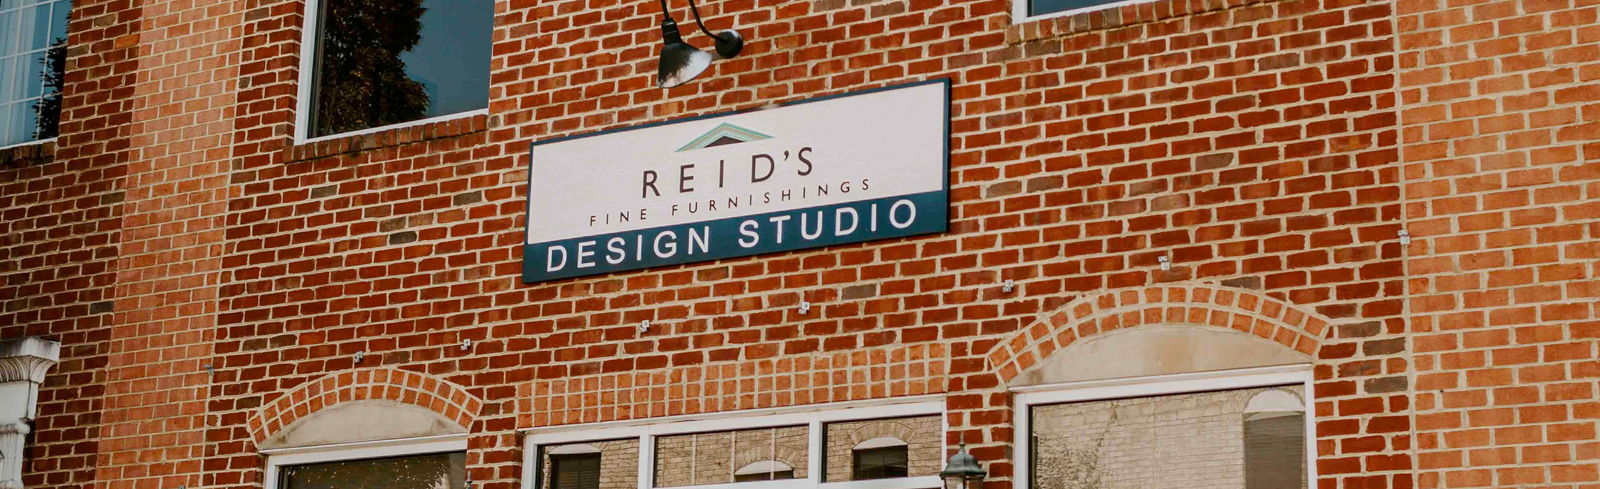 Reid's Fine Furnishings design studio storefront